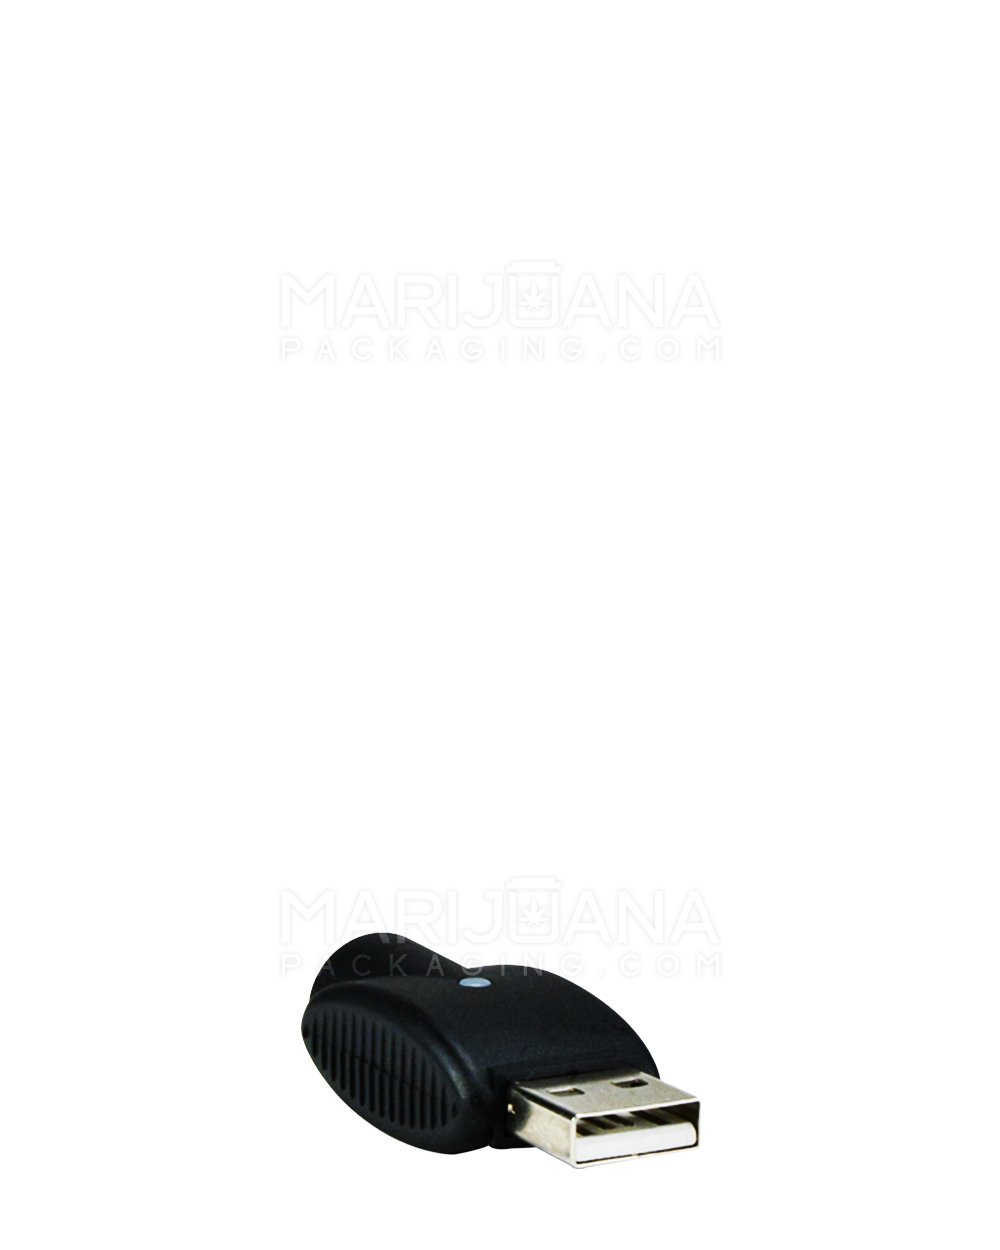 Buttonless USB Vape Battery Charger w/ LED Light | 510 Thread - 5